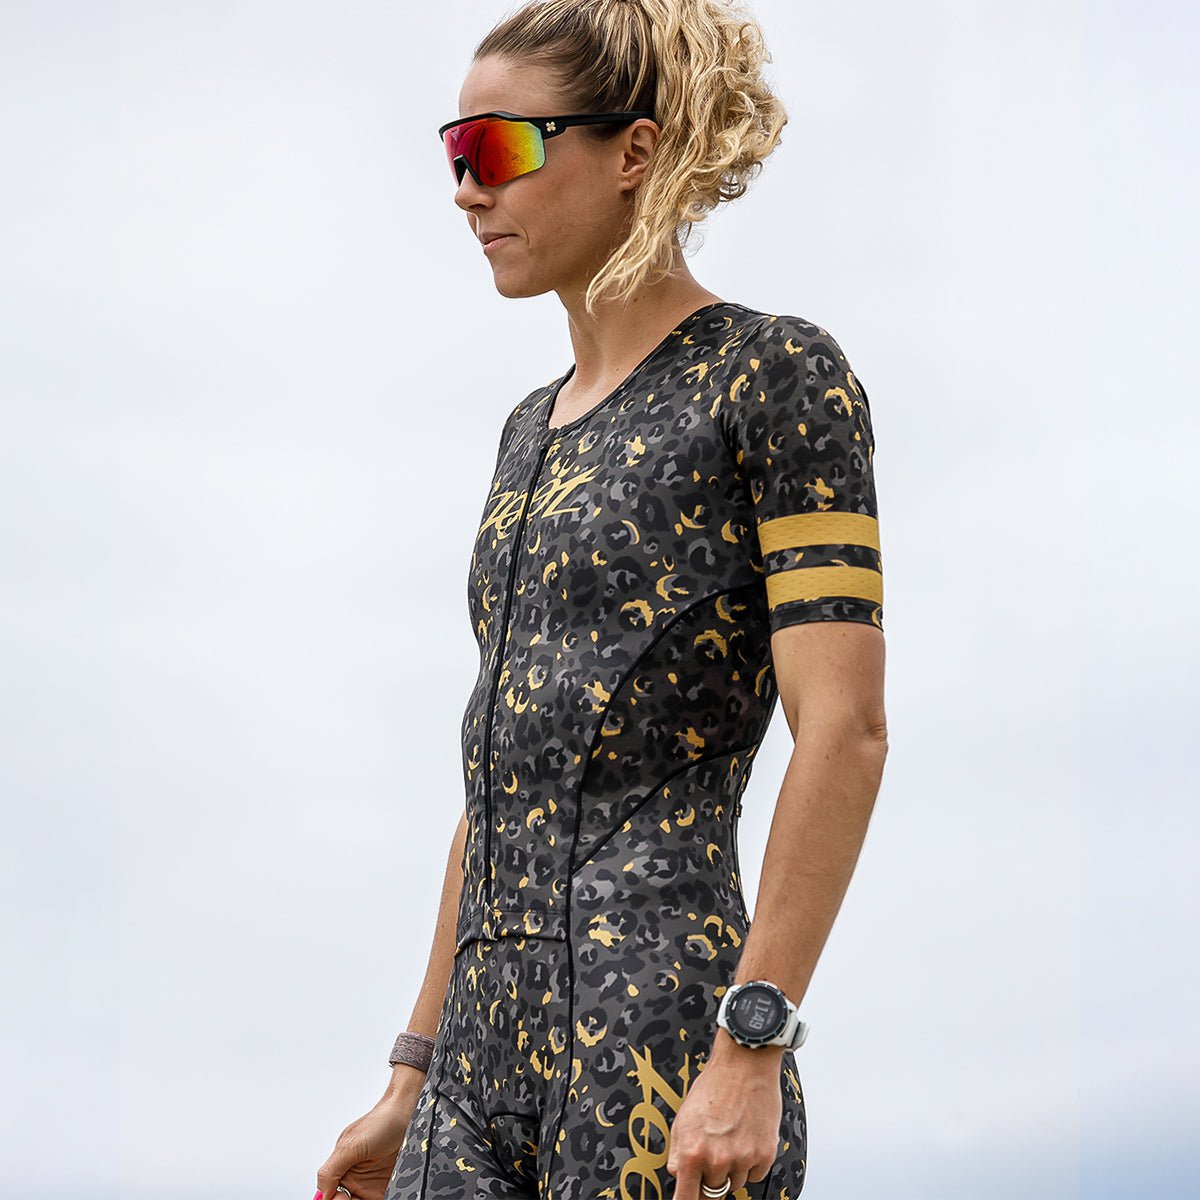 Women's Ltd Tri Aero Fz Racesuit - Cheetah